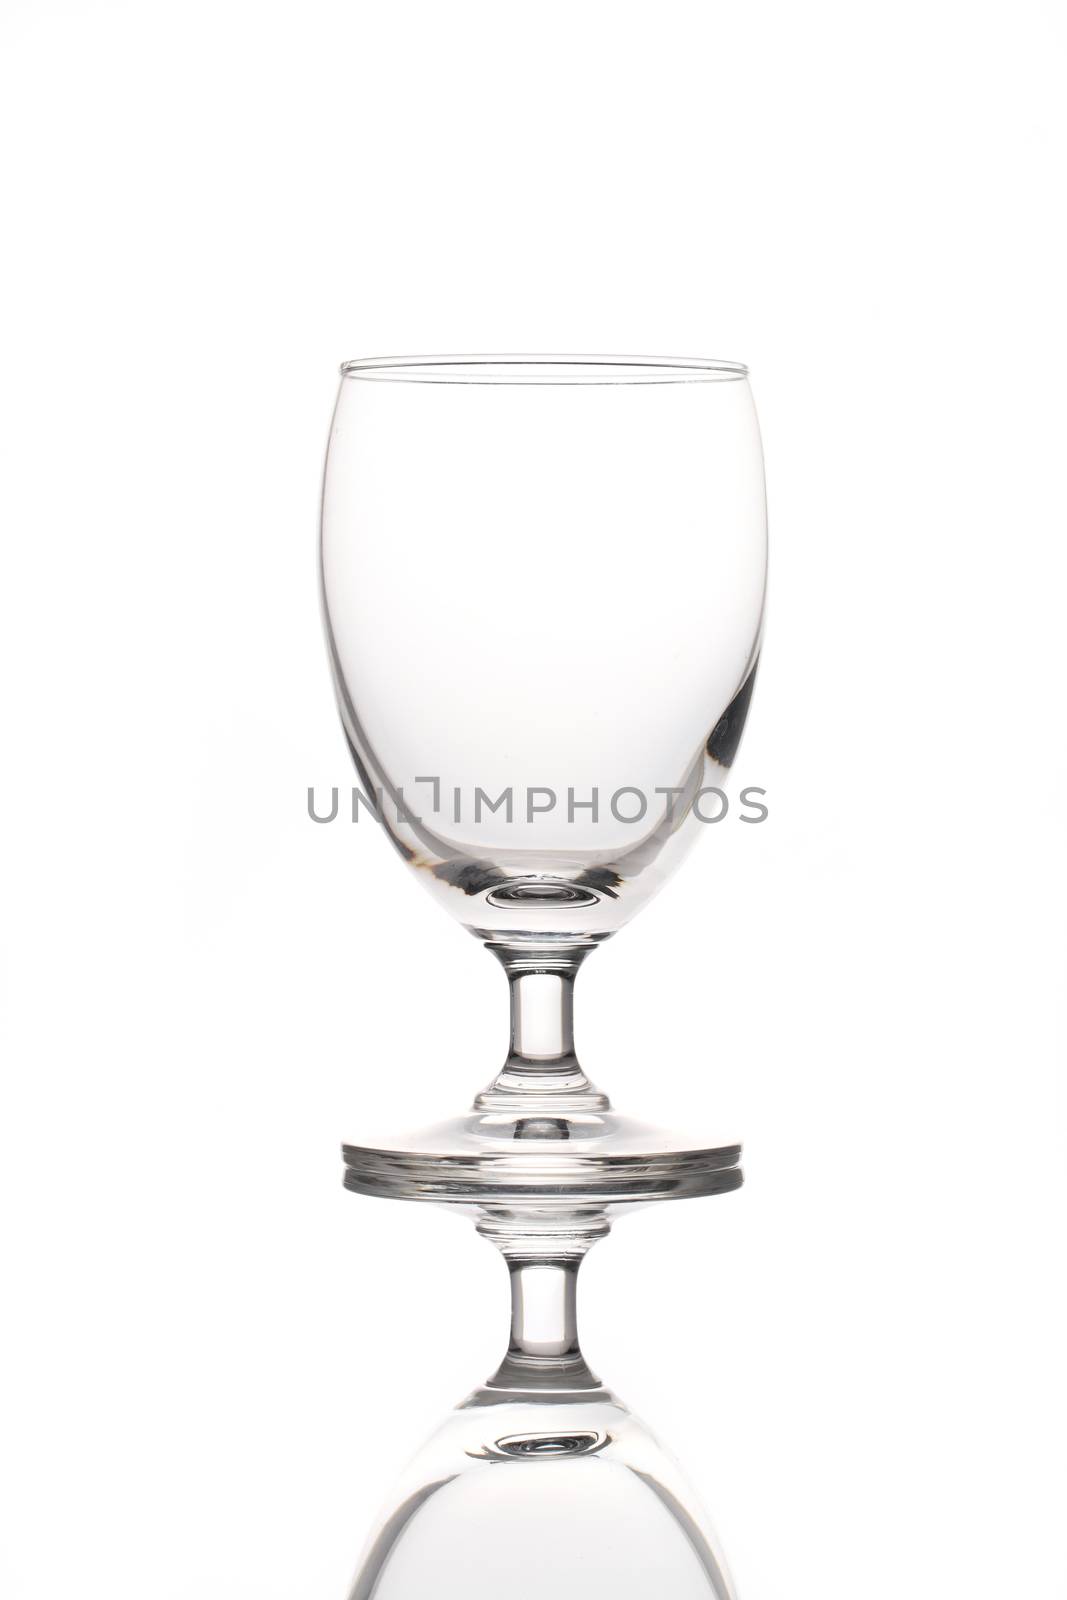 single empty wine glass isolated on the white background  by piyato